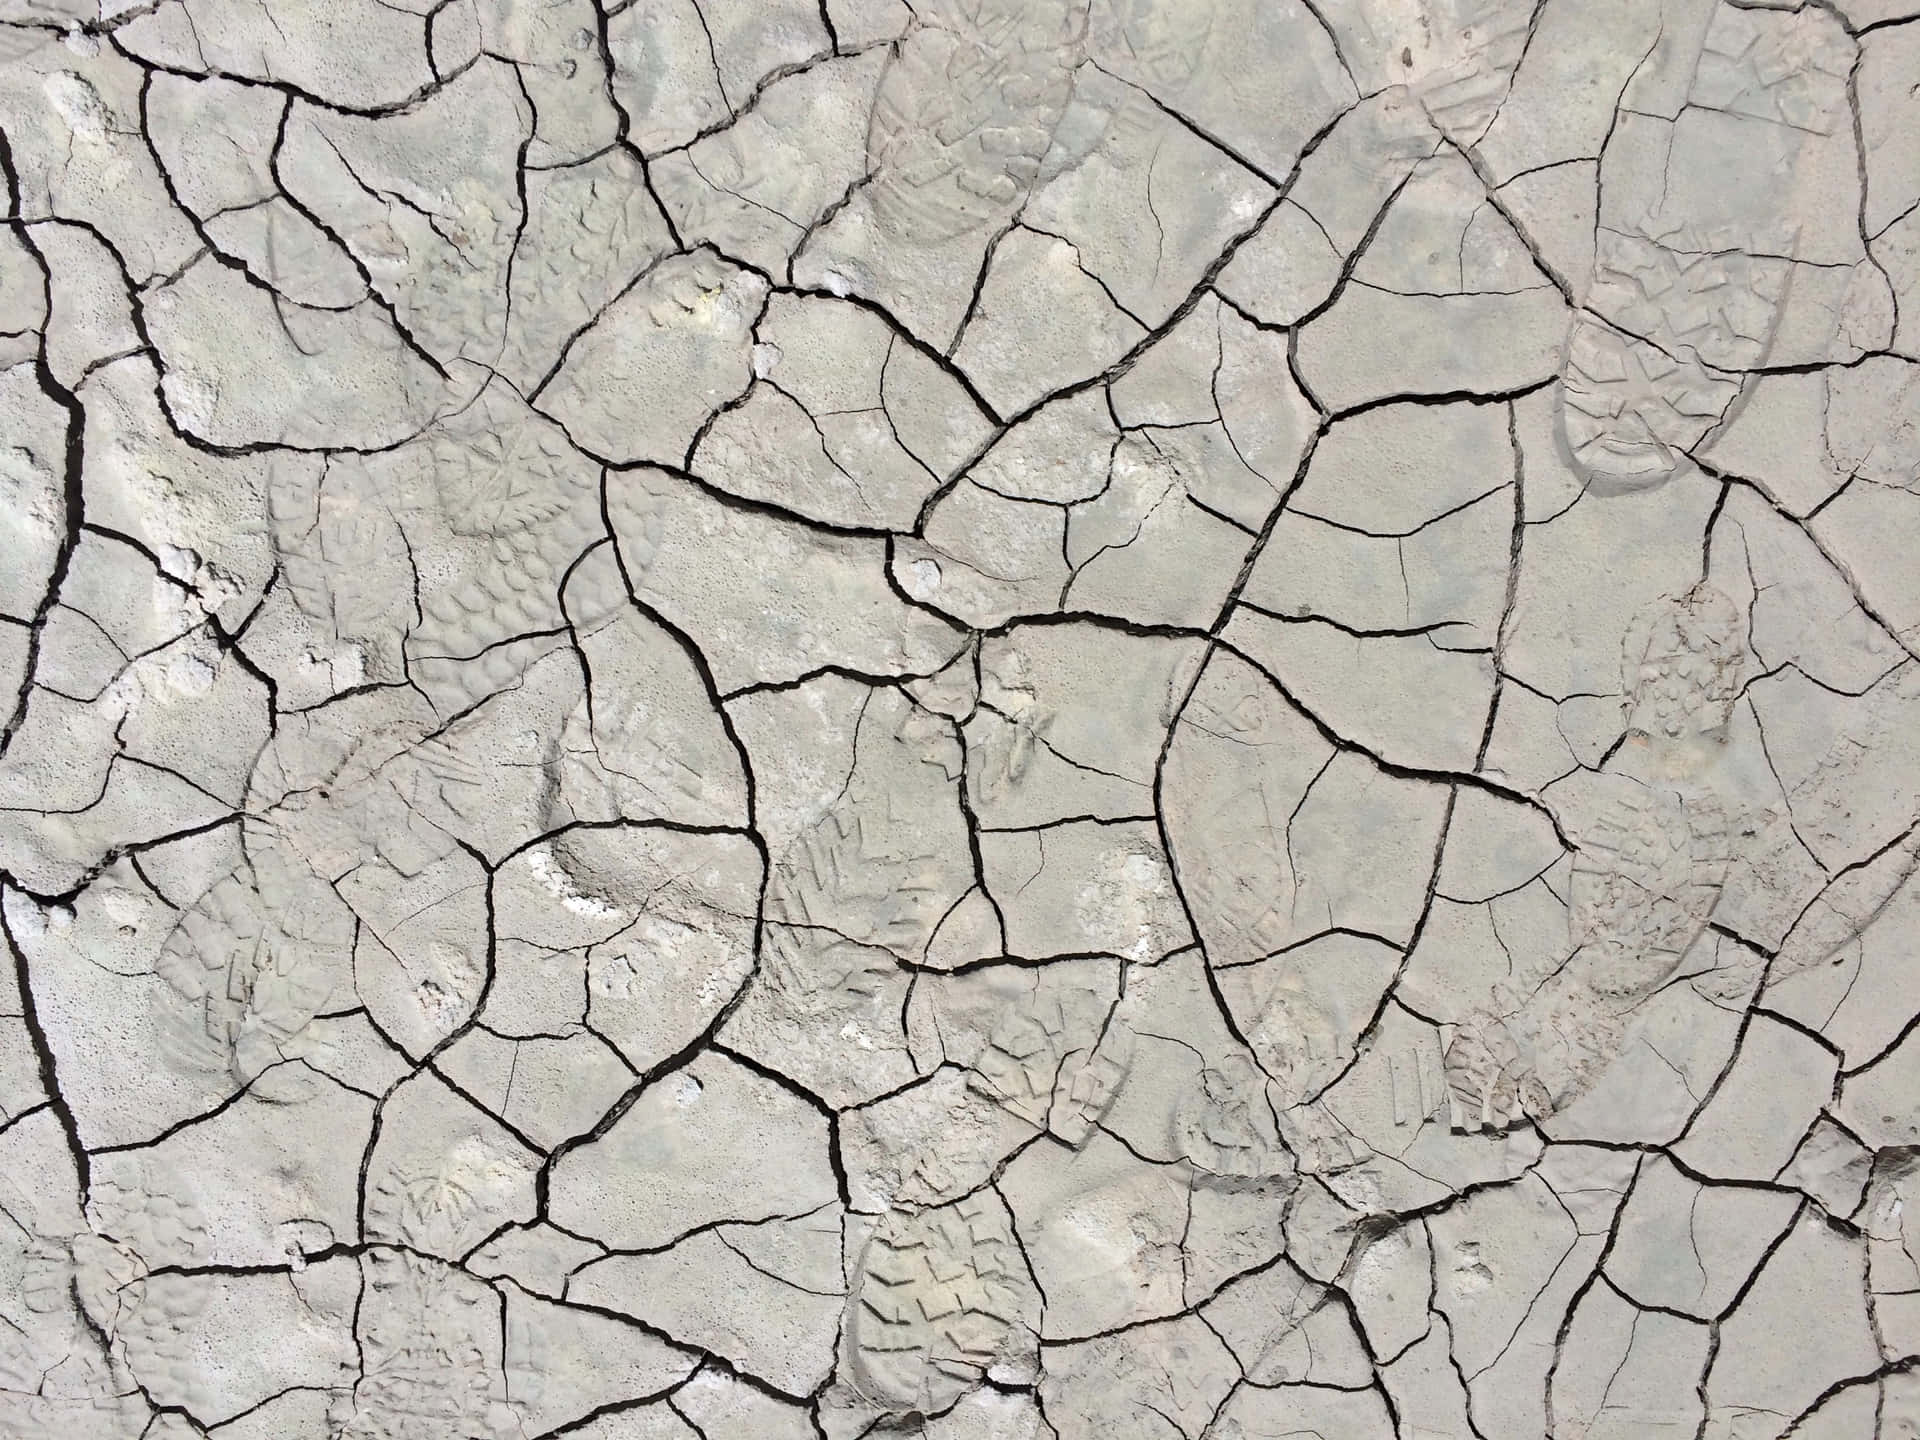 Cracked Dry Soil Background Photo